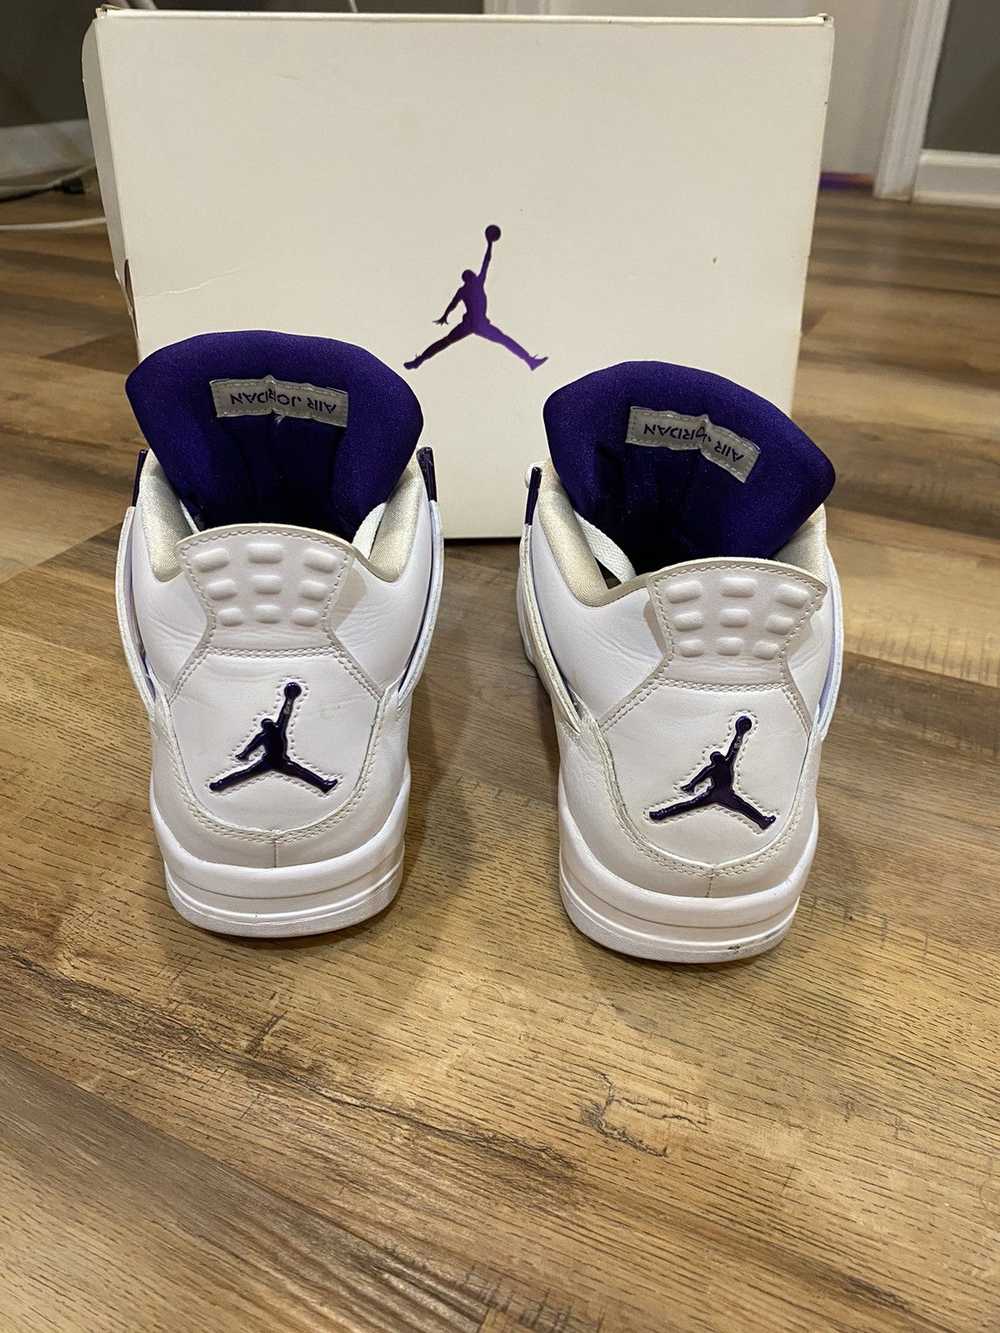 Jordan Brand Jordan 4 Mettalic Purple 2020 - image 3